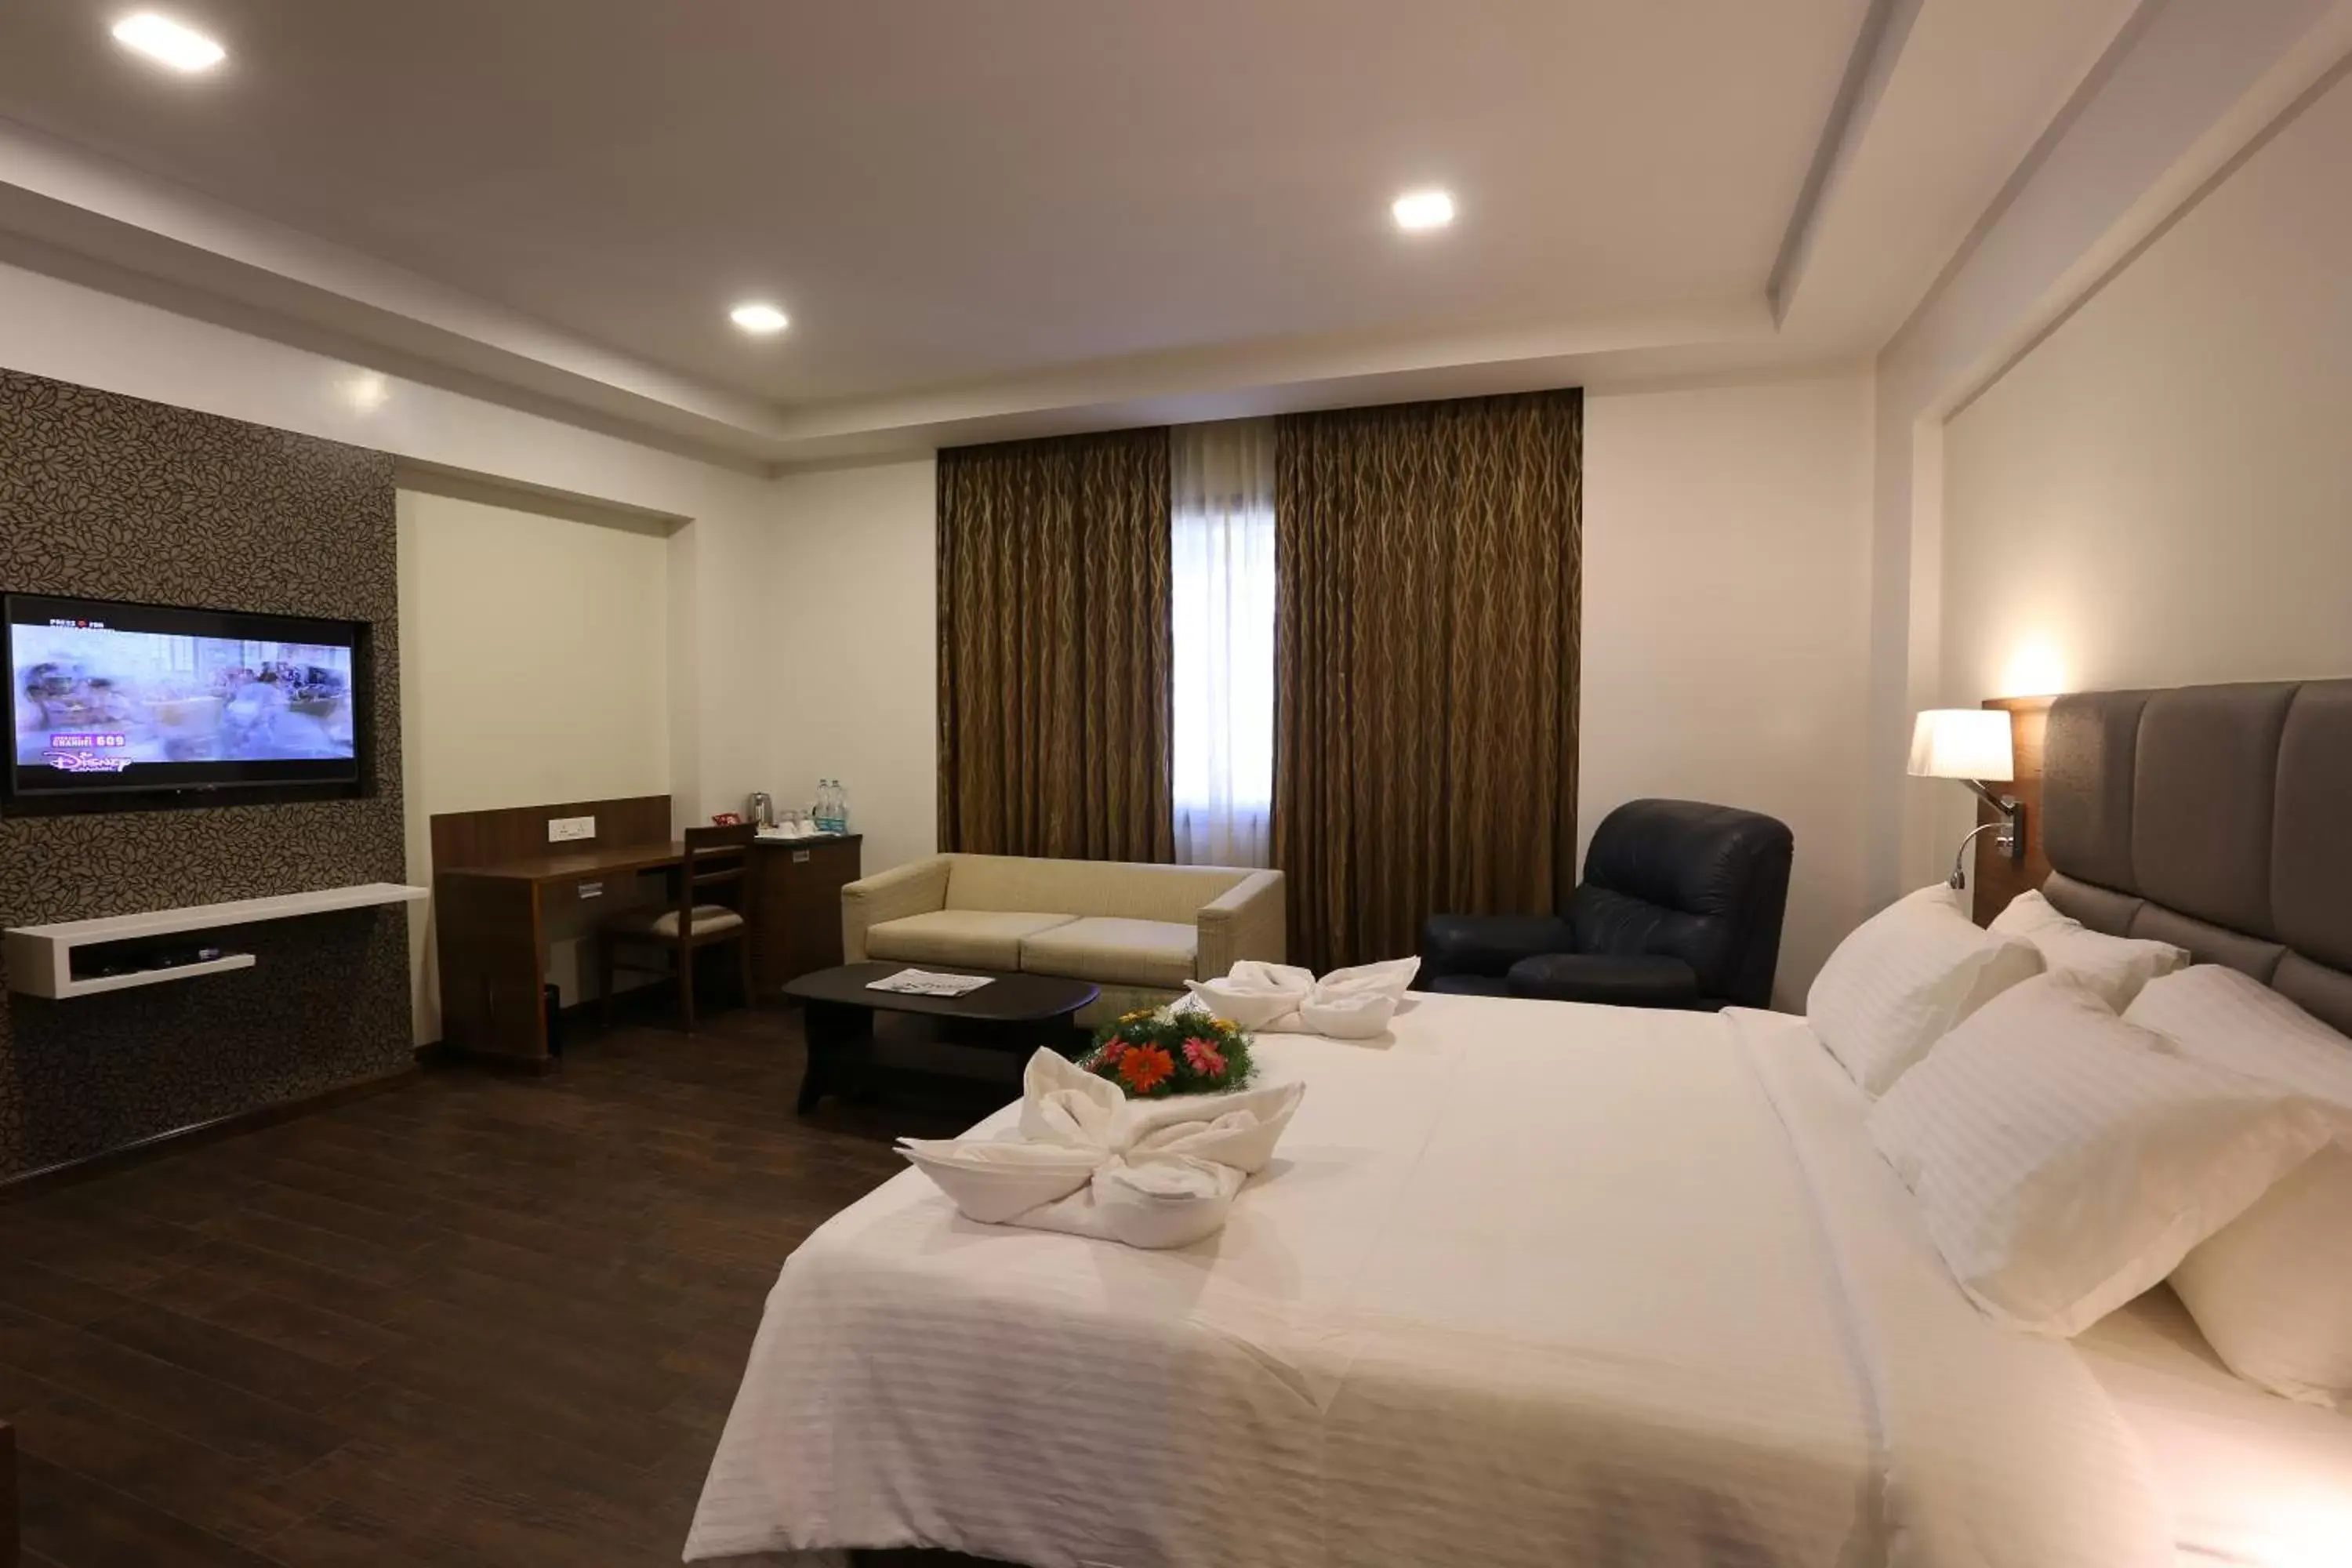 Hotel Seetharam Select